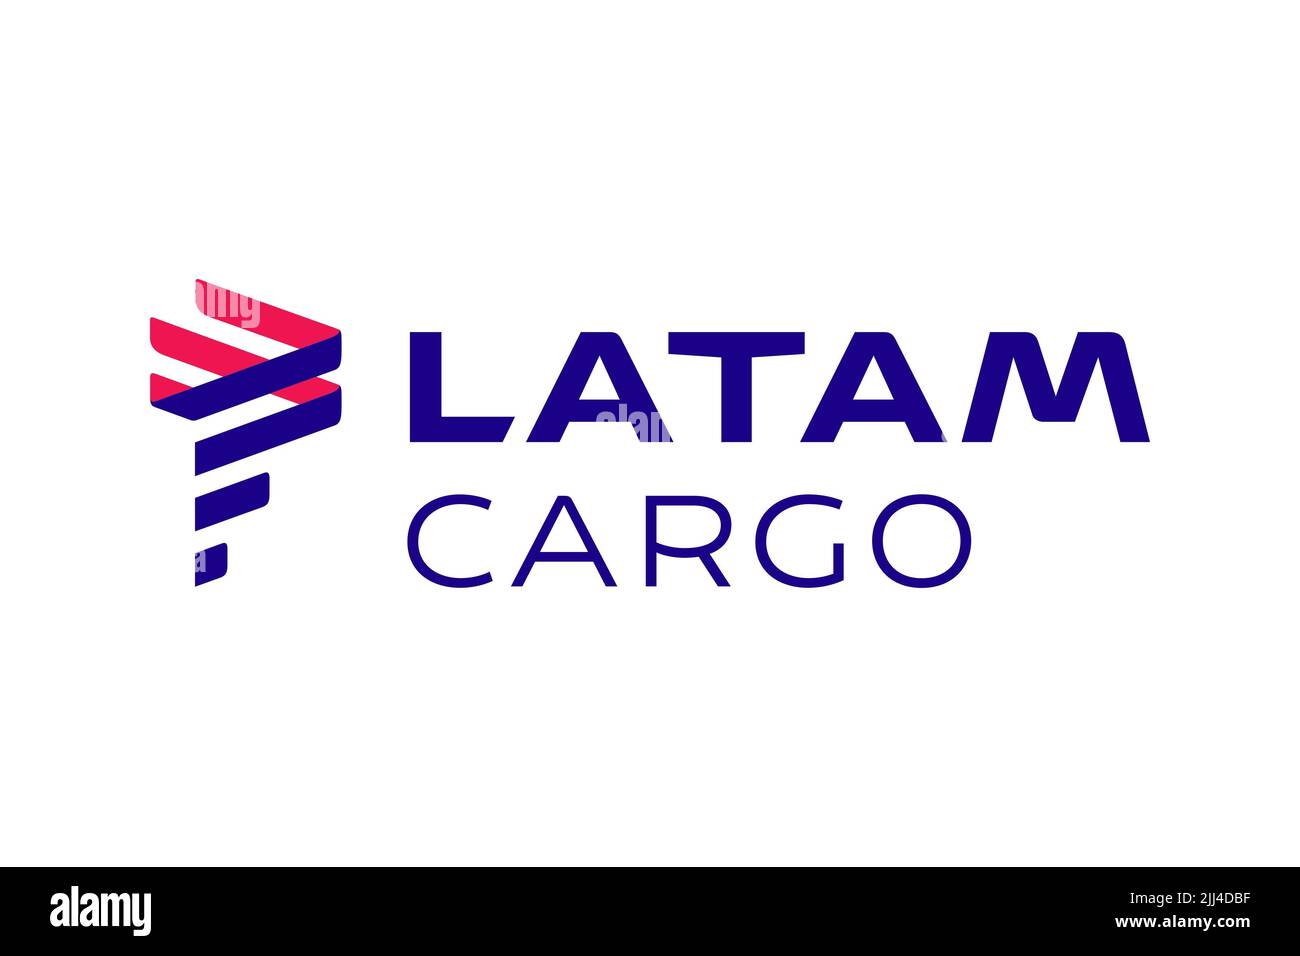 https://c8.alamy.com/compes/2jj4dbf/latam-cargo-brasil-logo-fondo-blanco-2jj4dbf.jpg